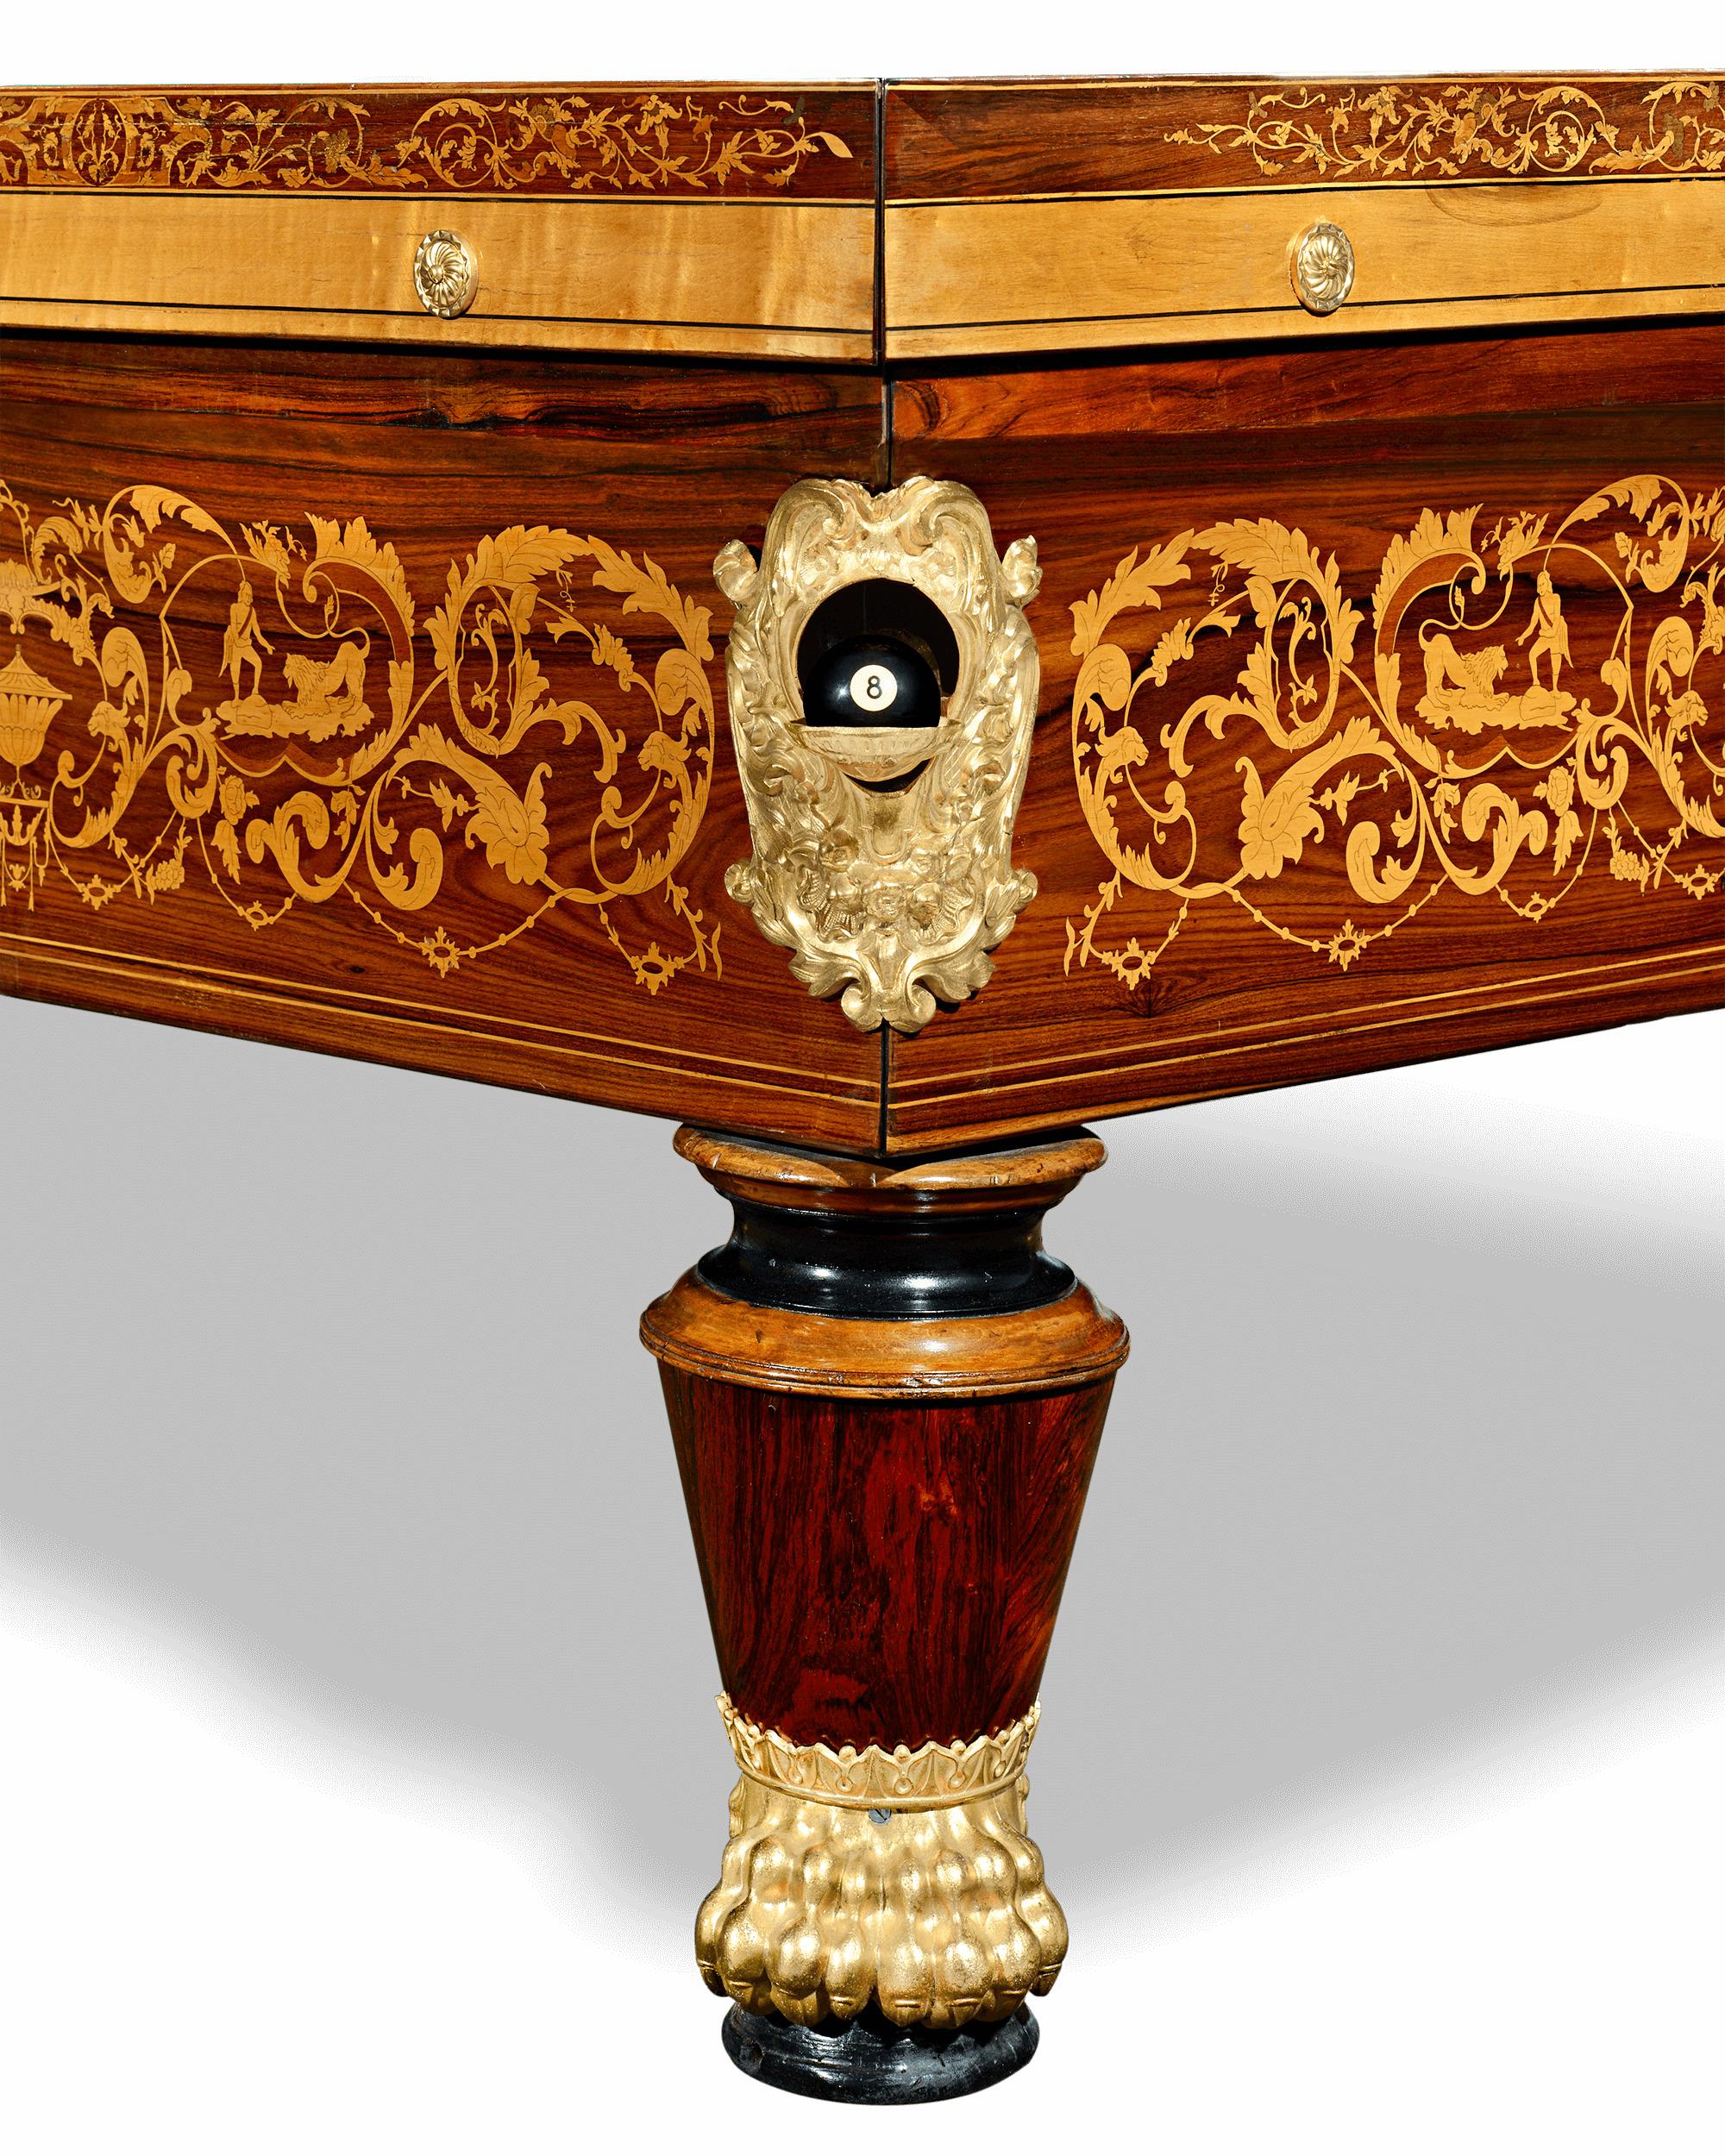 French General Clauzel's Charlex X Billiard Table